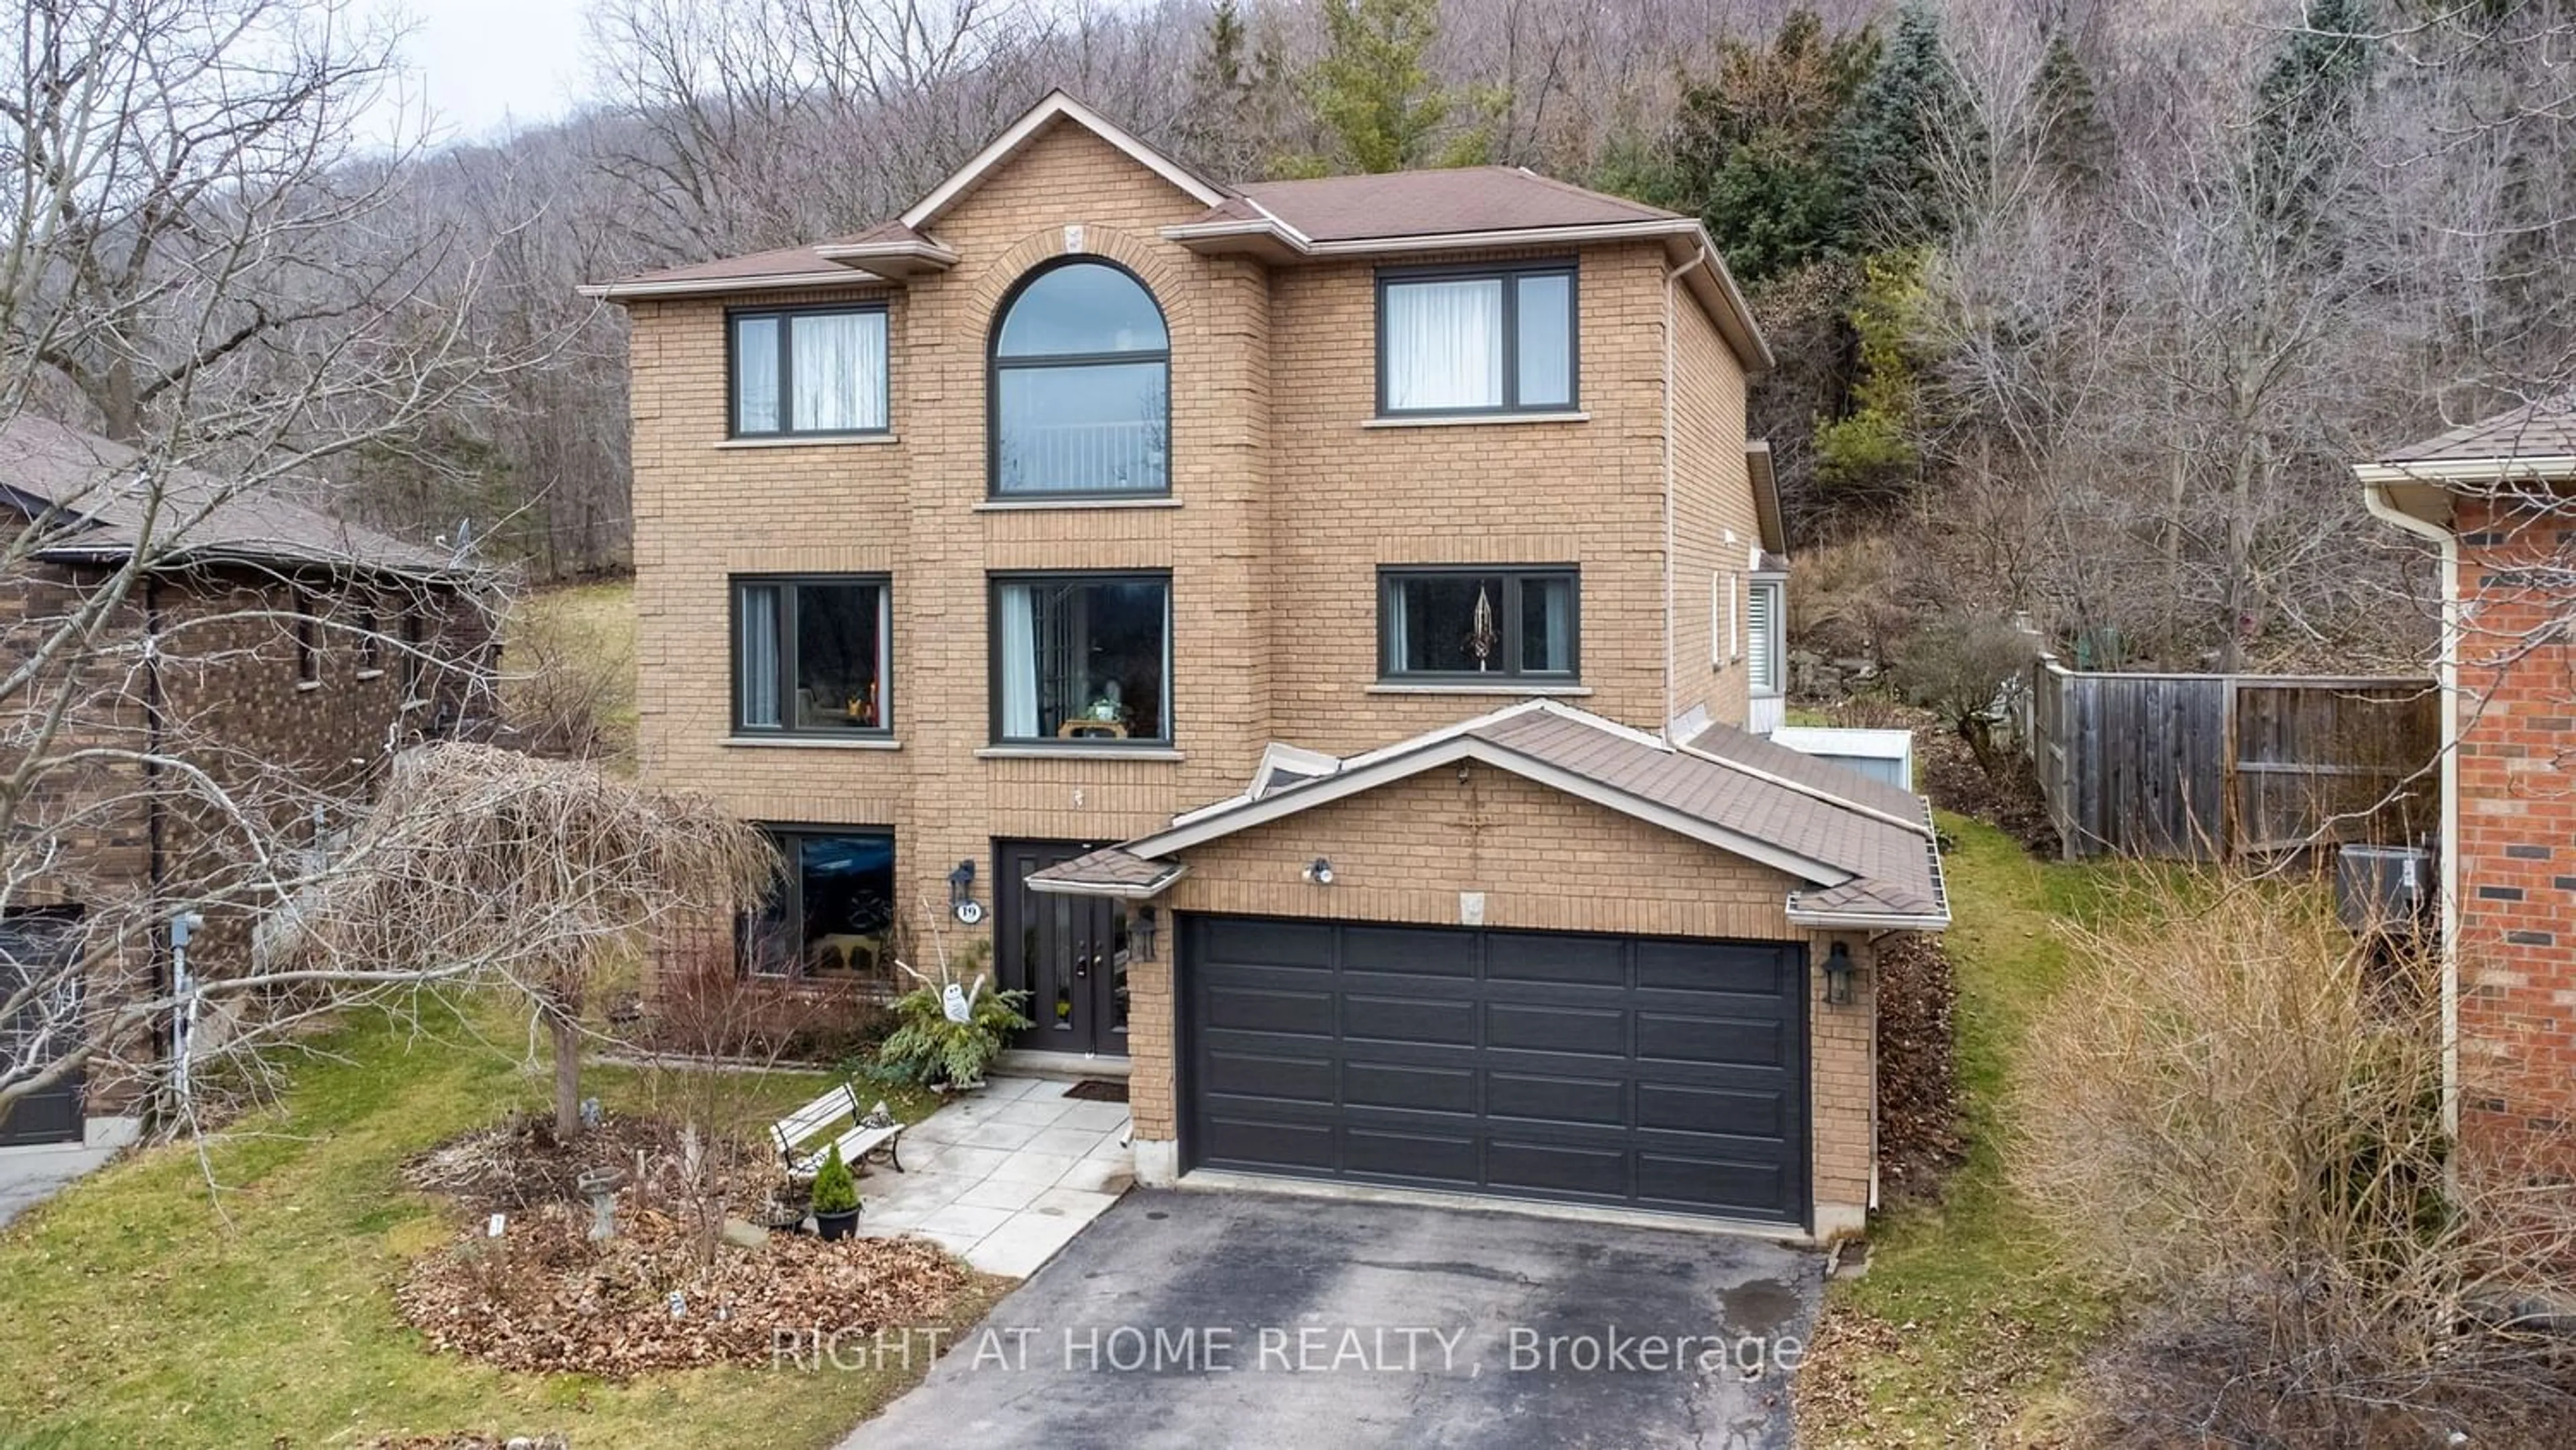 Home with brick exterior material for 19 Renata Crt, Hamilton Ontario L9H 6X1